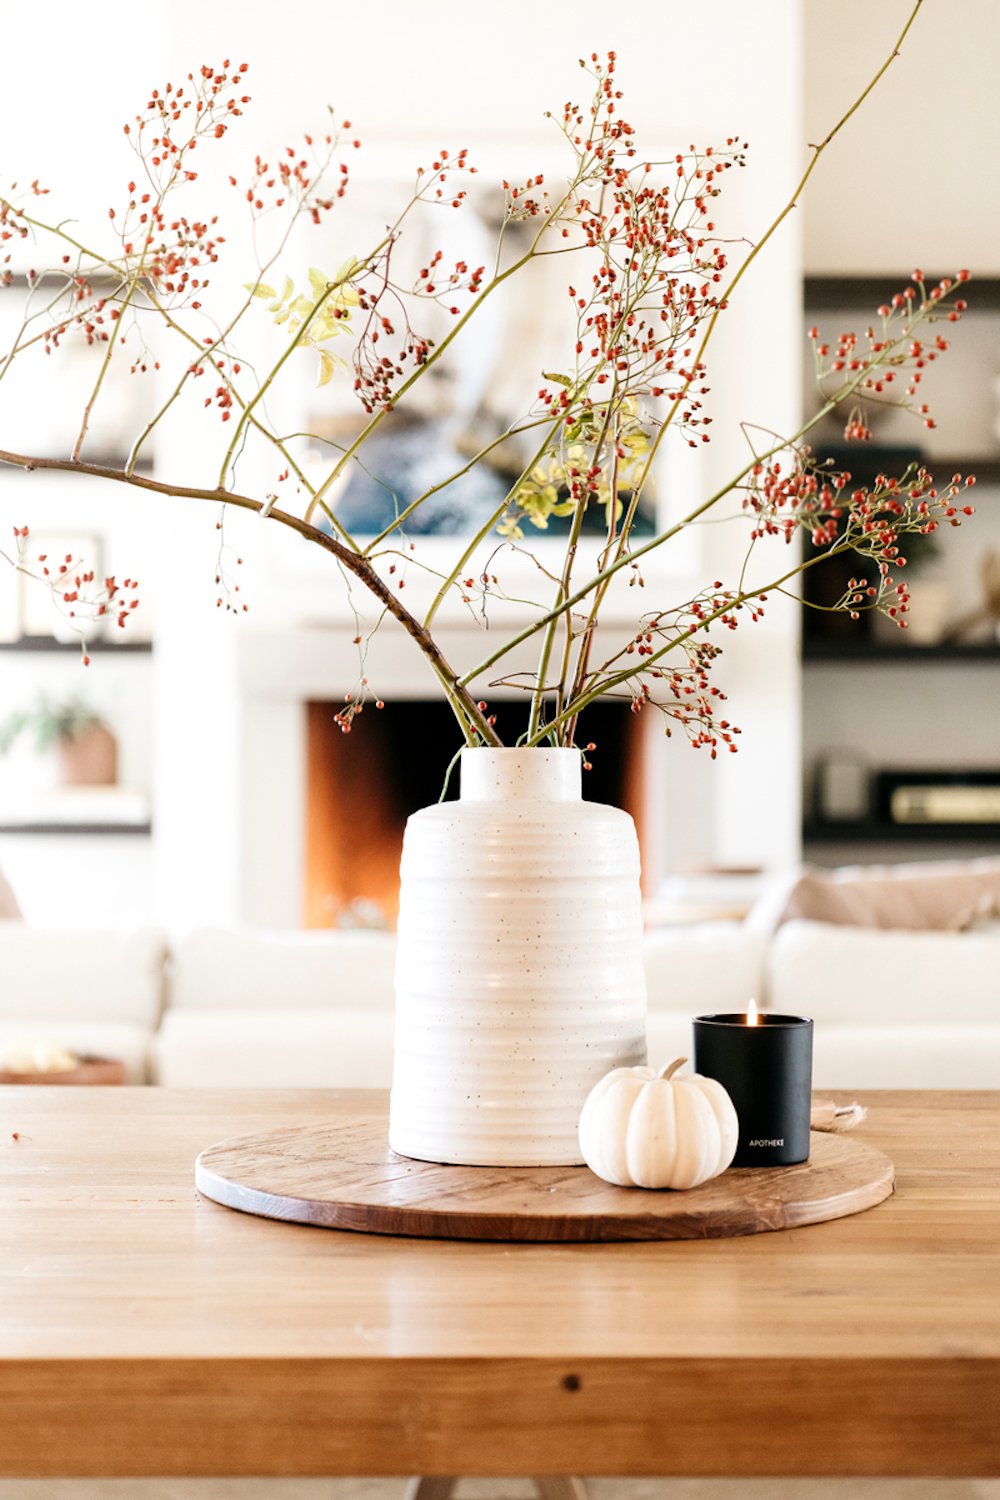 Dried flower arrangement in white vase on wooden table.